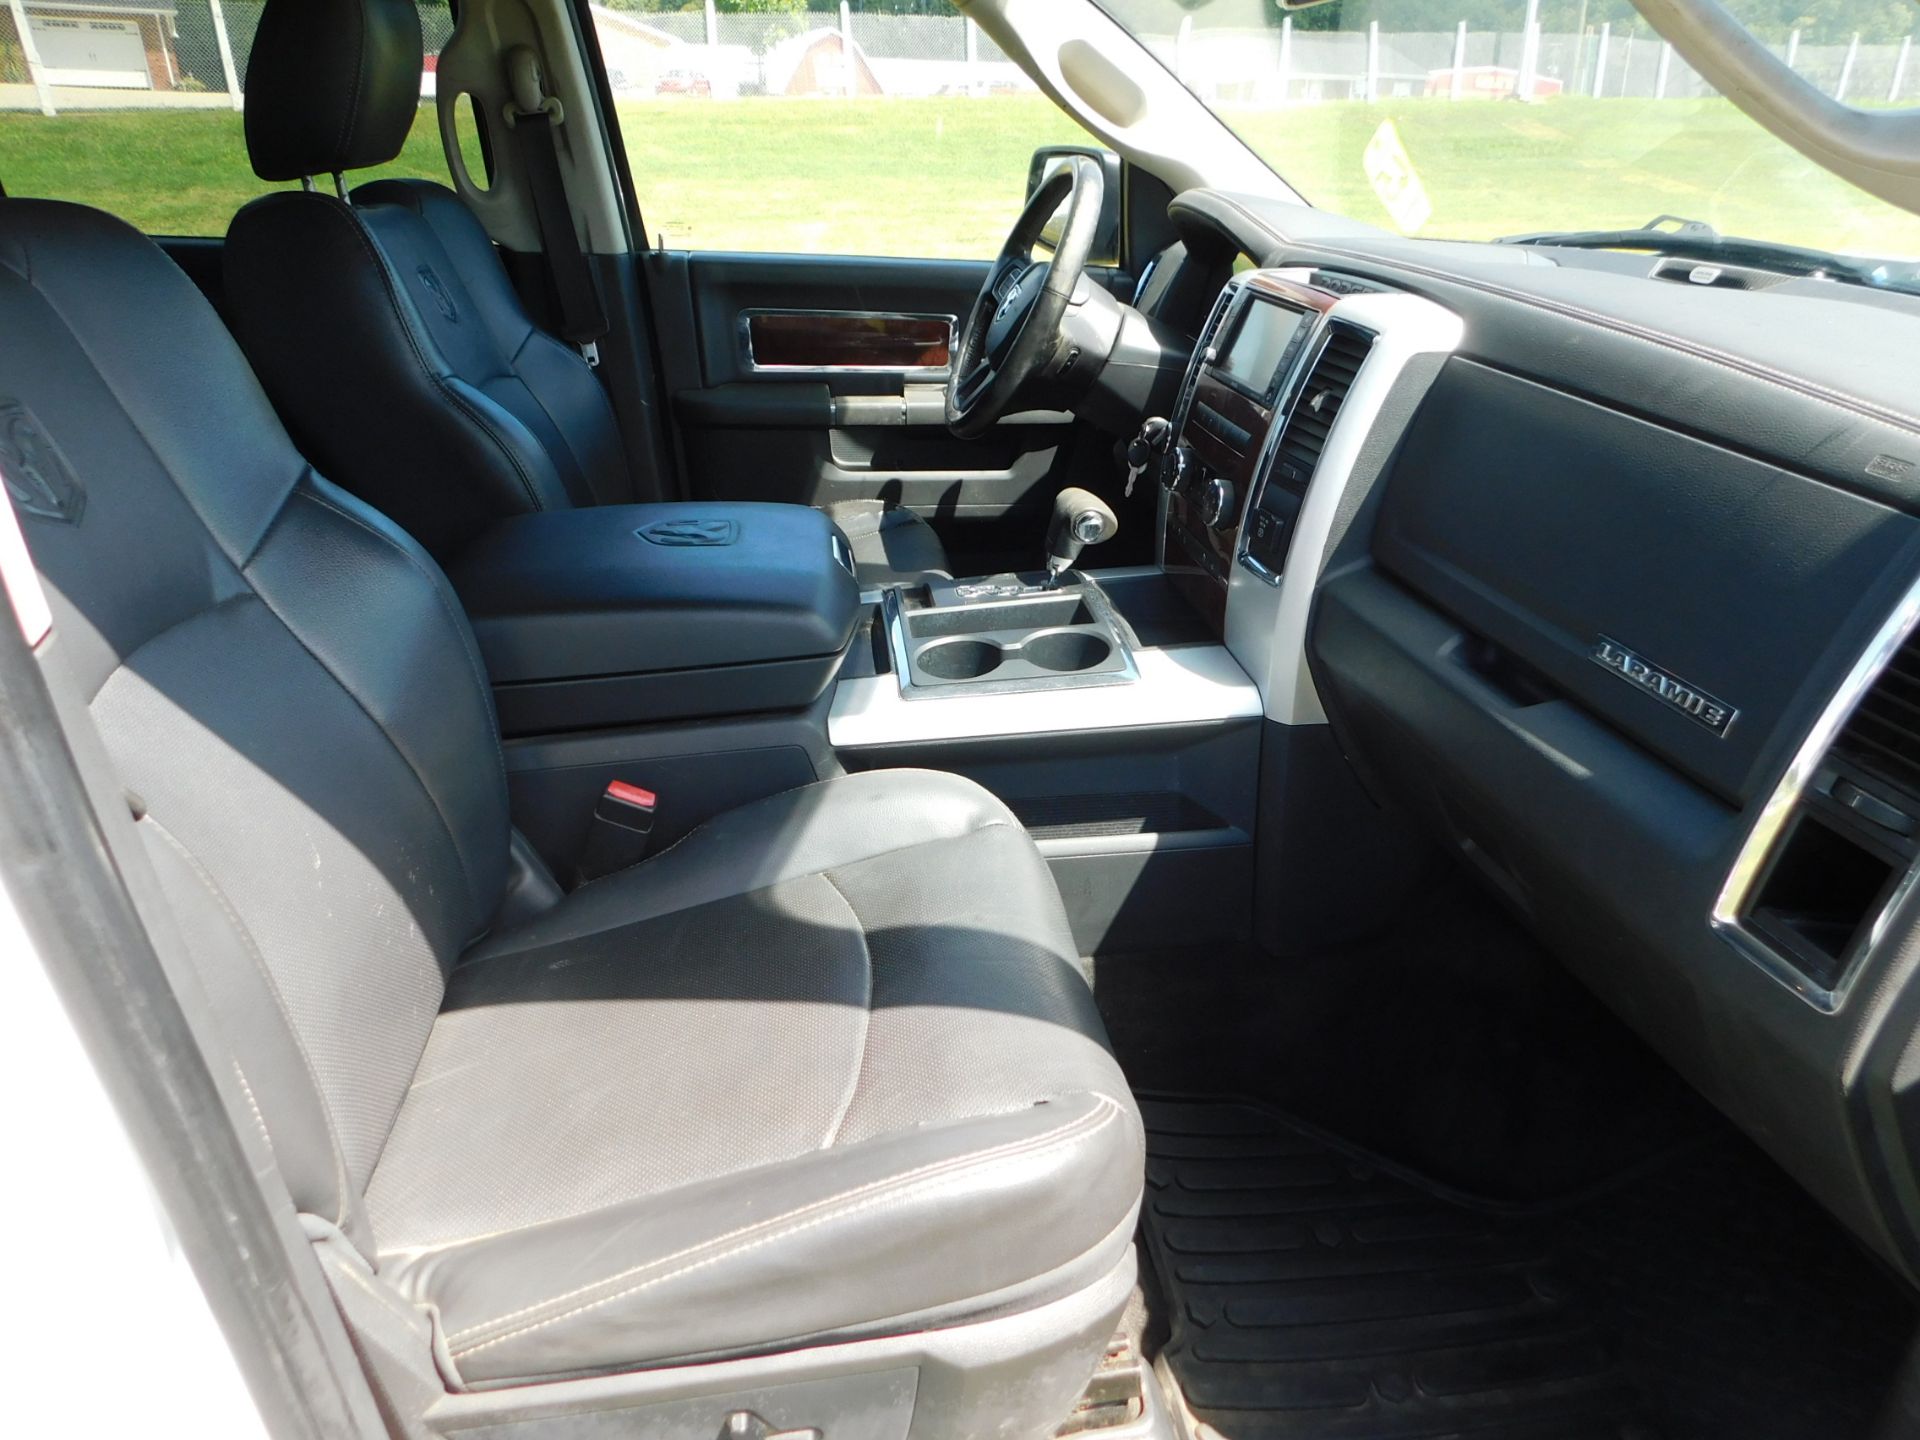 2012 Dodge Ram 1500 Pickup, Crew Cab, 6' Bed, Automatic, 4 WD, AM/FM,AC, PL, PW, Hemi 5.7 L - Image 42 of 53